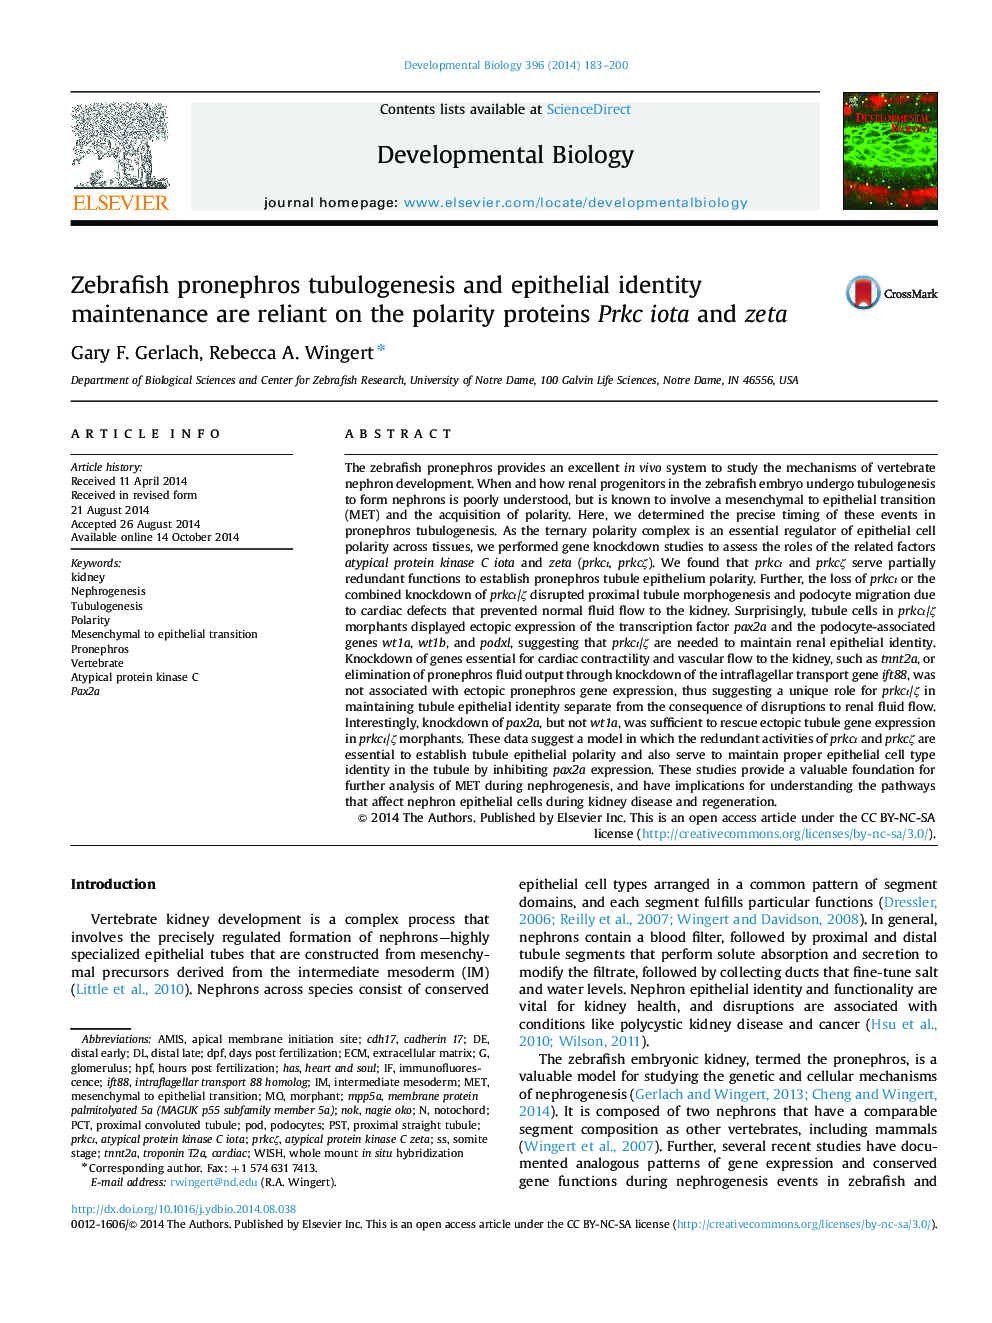 Zebrafish pronephros tubulogenesis and epithelial identity maintenance are reliant on the polarity proteins Prkc iota and zeta